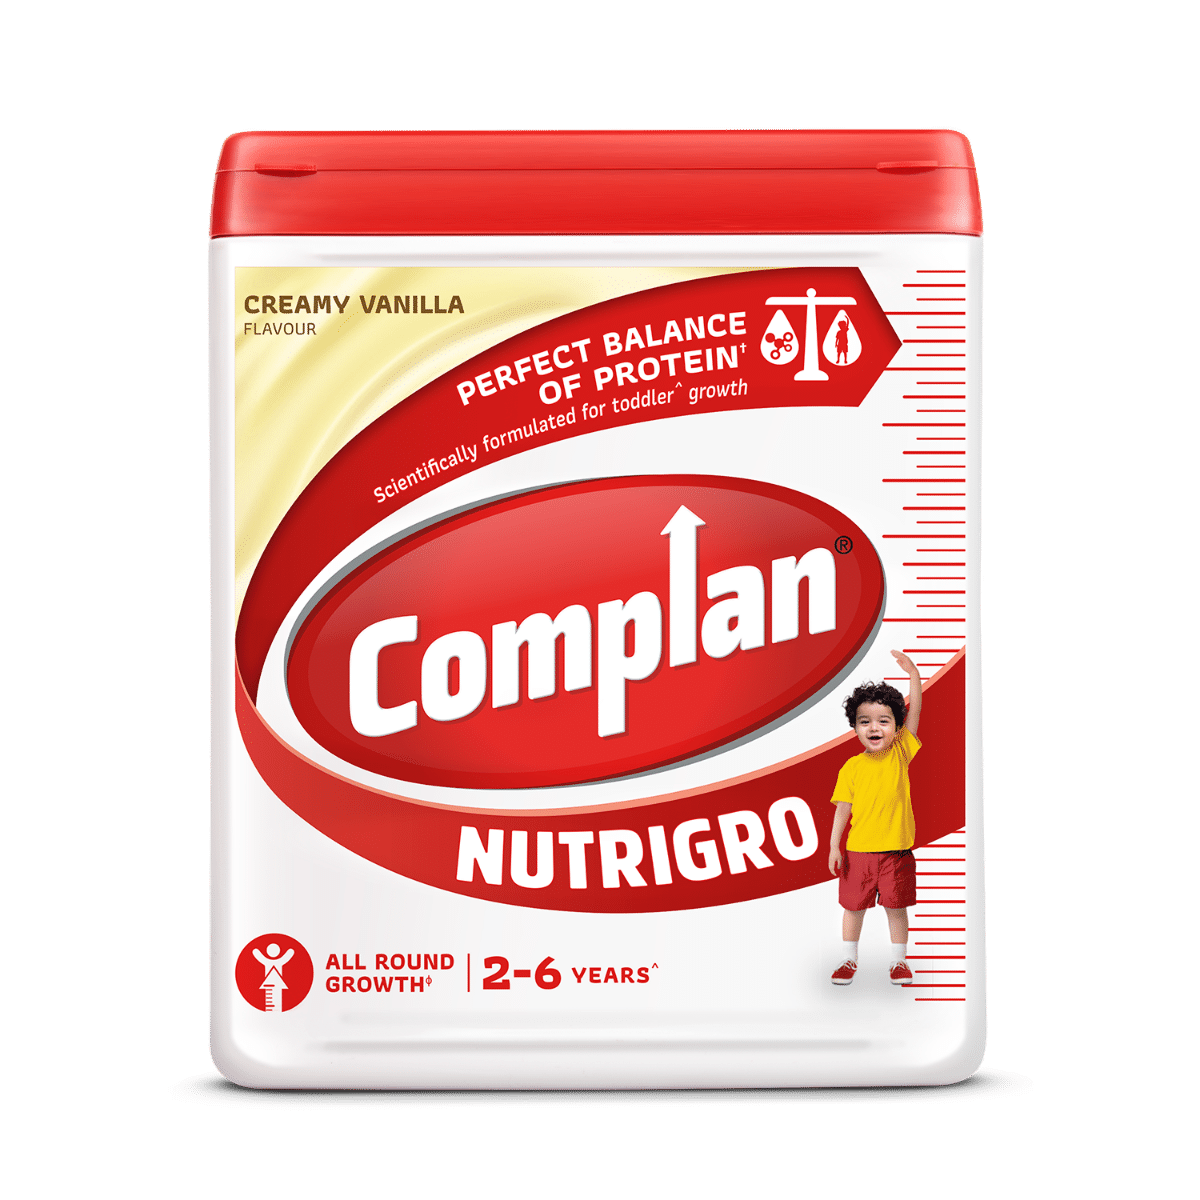 Buy Complan Nutrigro Creamy Vanilla Flavoured Health and Nutrition Drink, 400 gm Jar Online